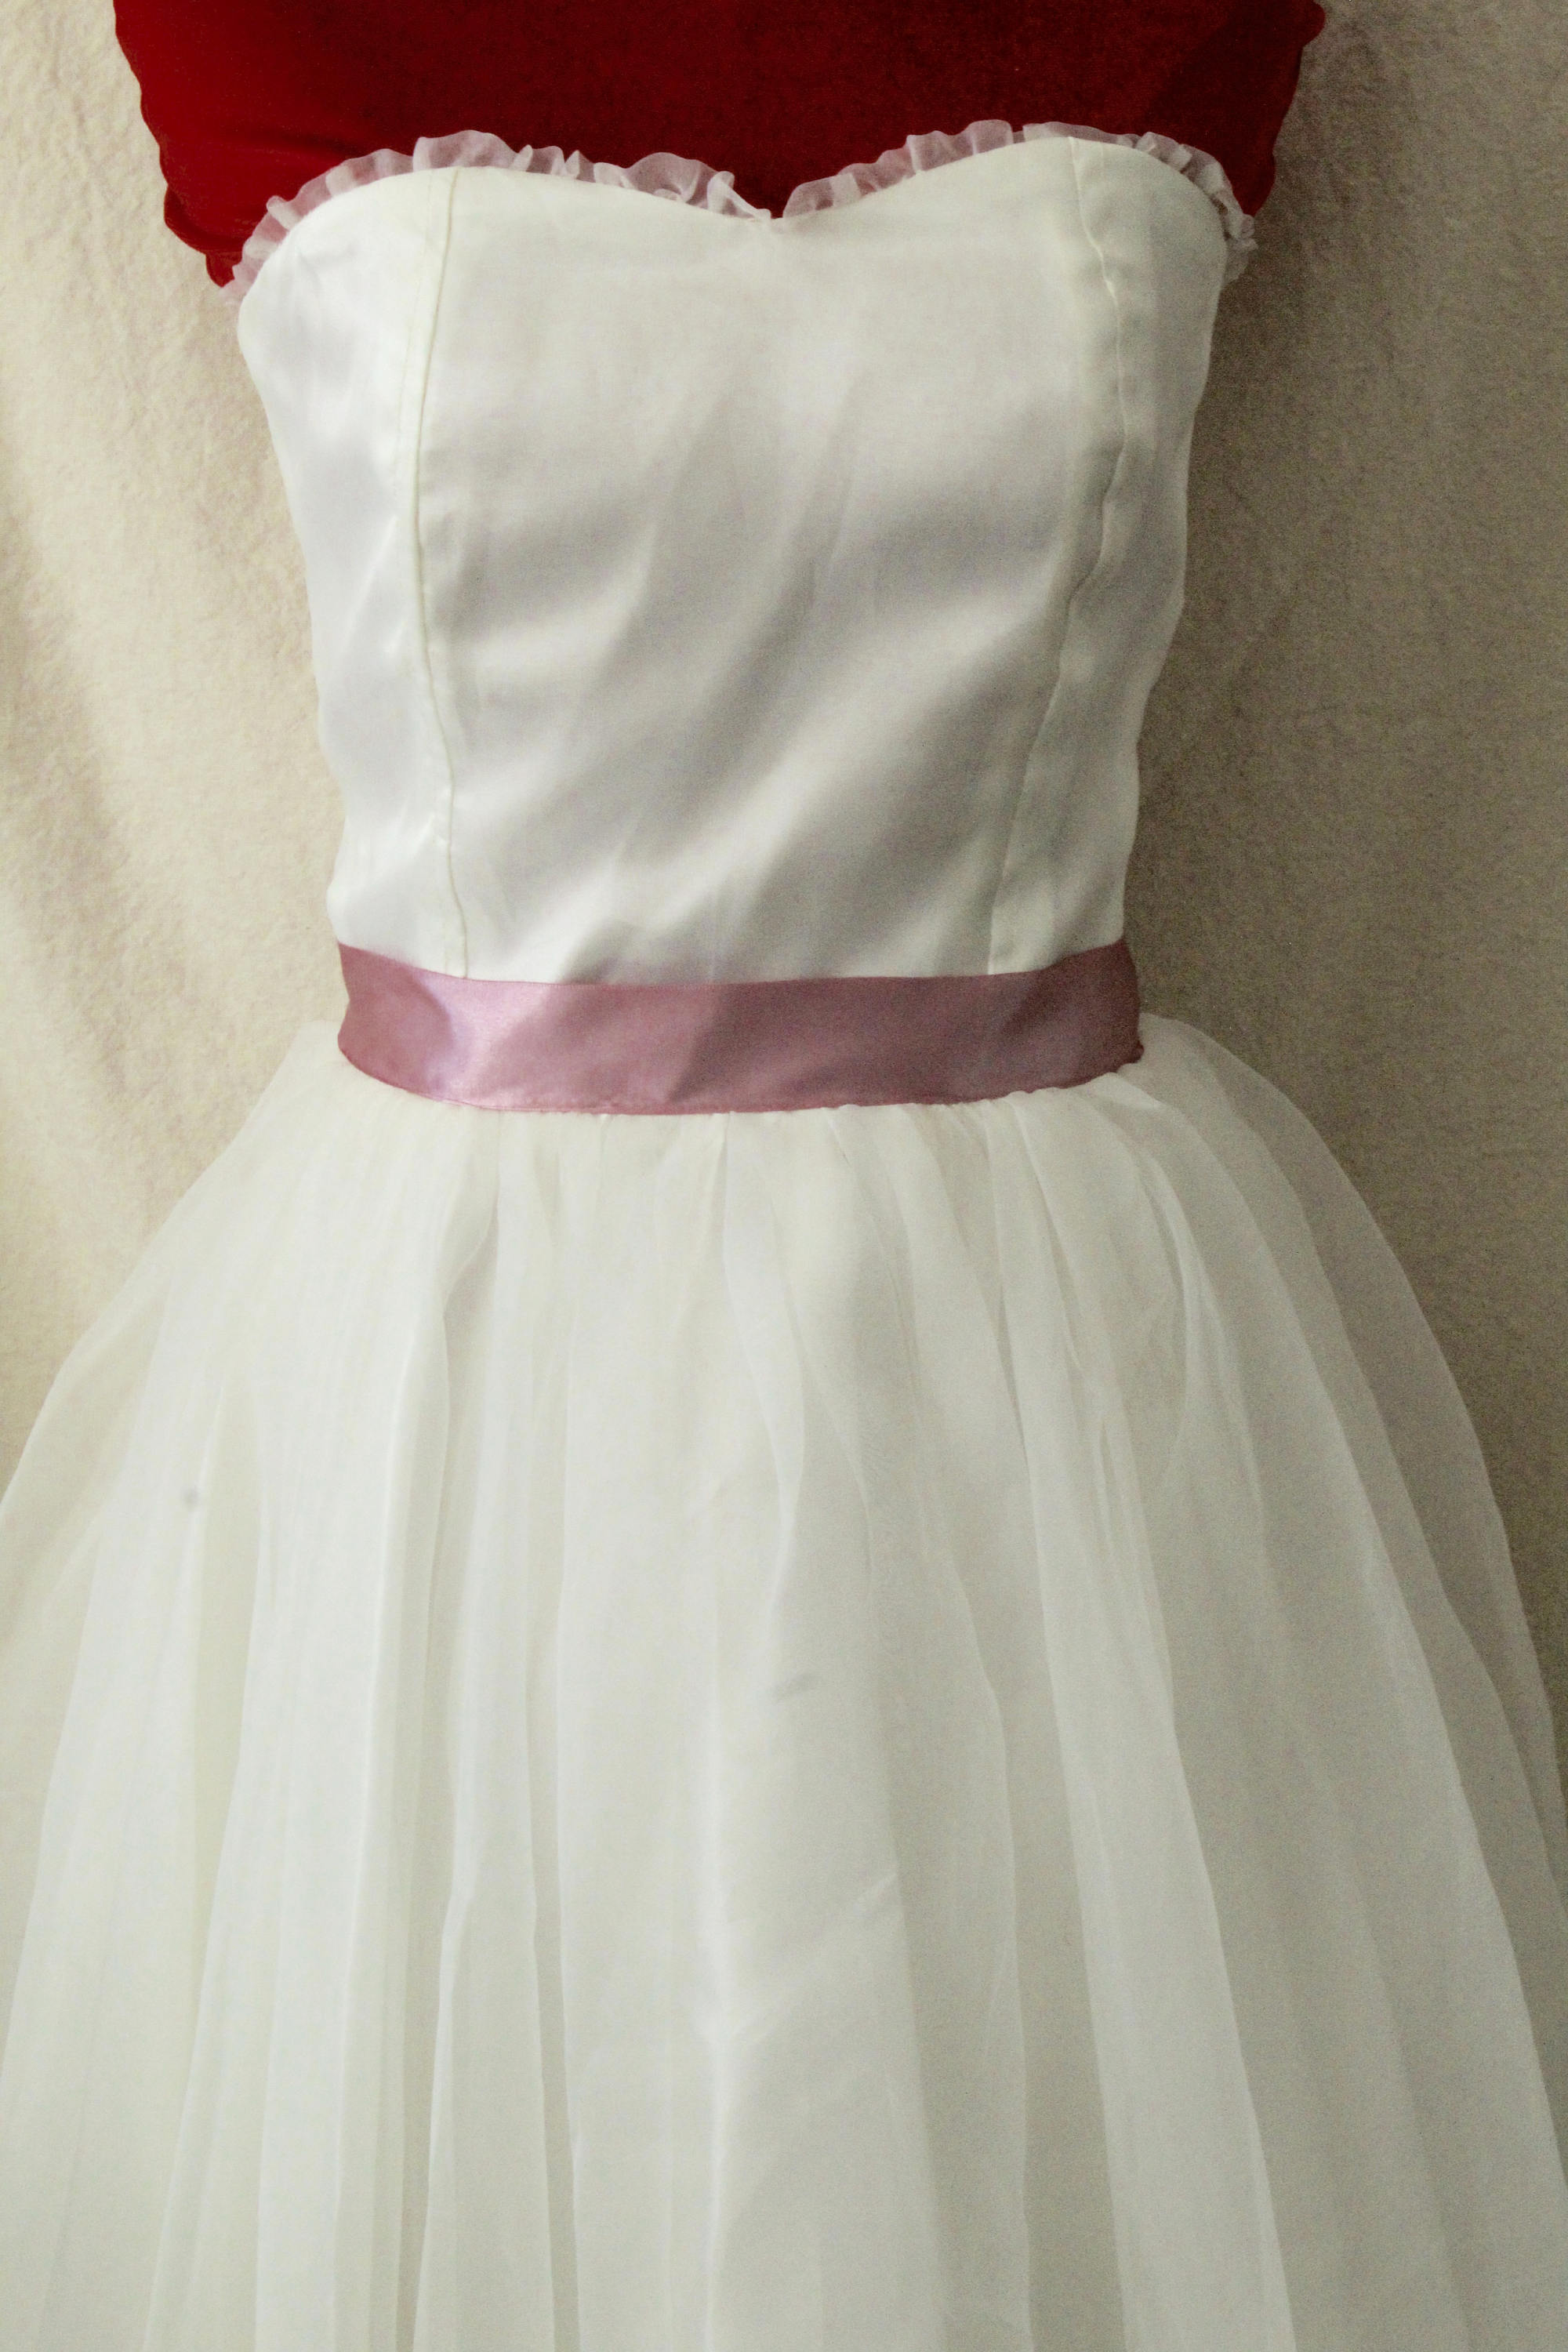 1950s Strapless White Ball Gown Wedding Dress | Etsy